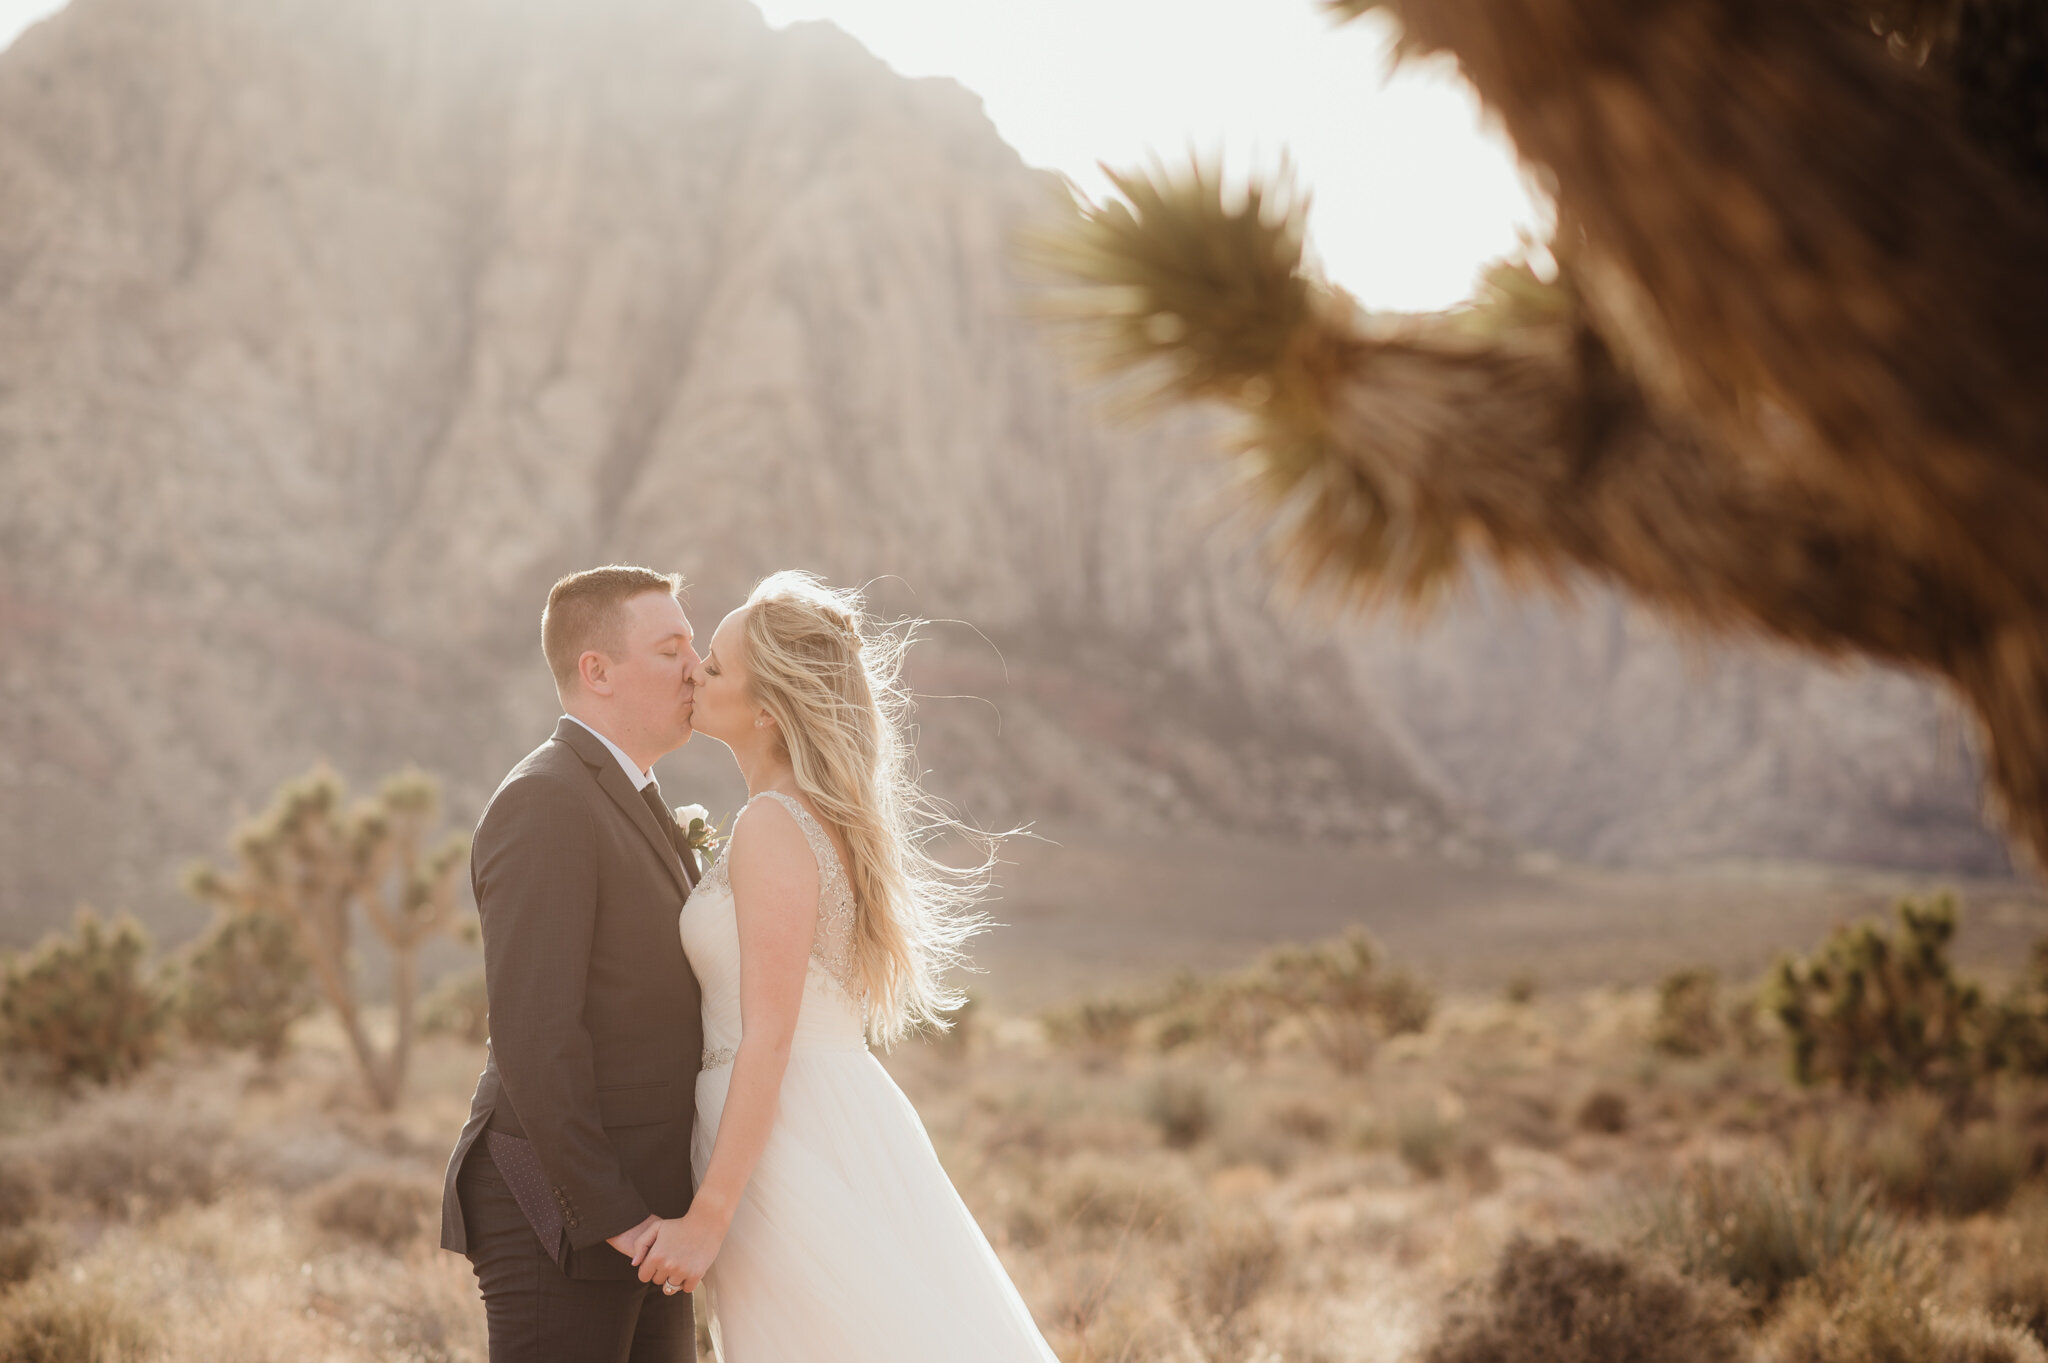 Spring Mountain Ranch Wedding Photos - Amber Garrett Photography - 037.jpg